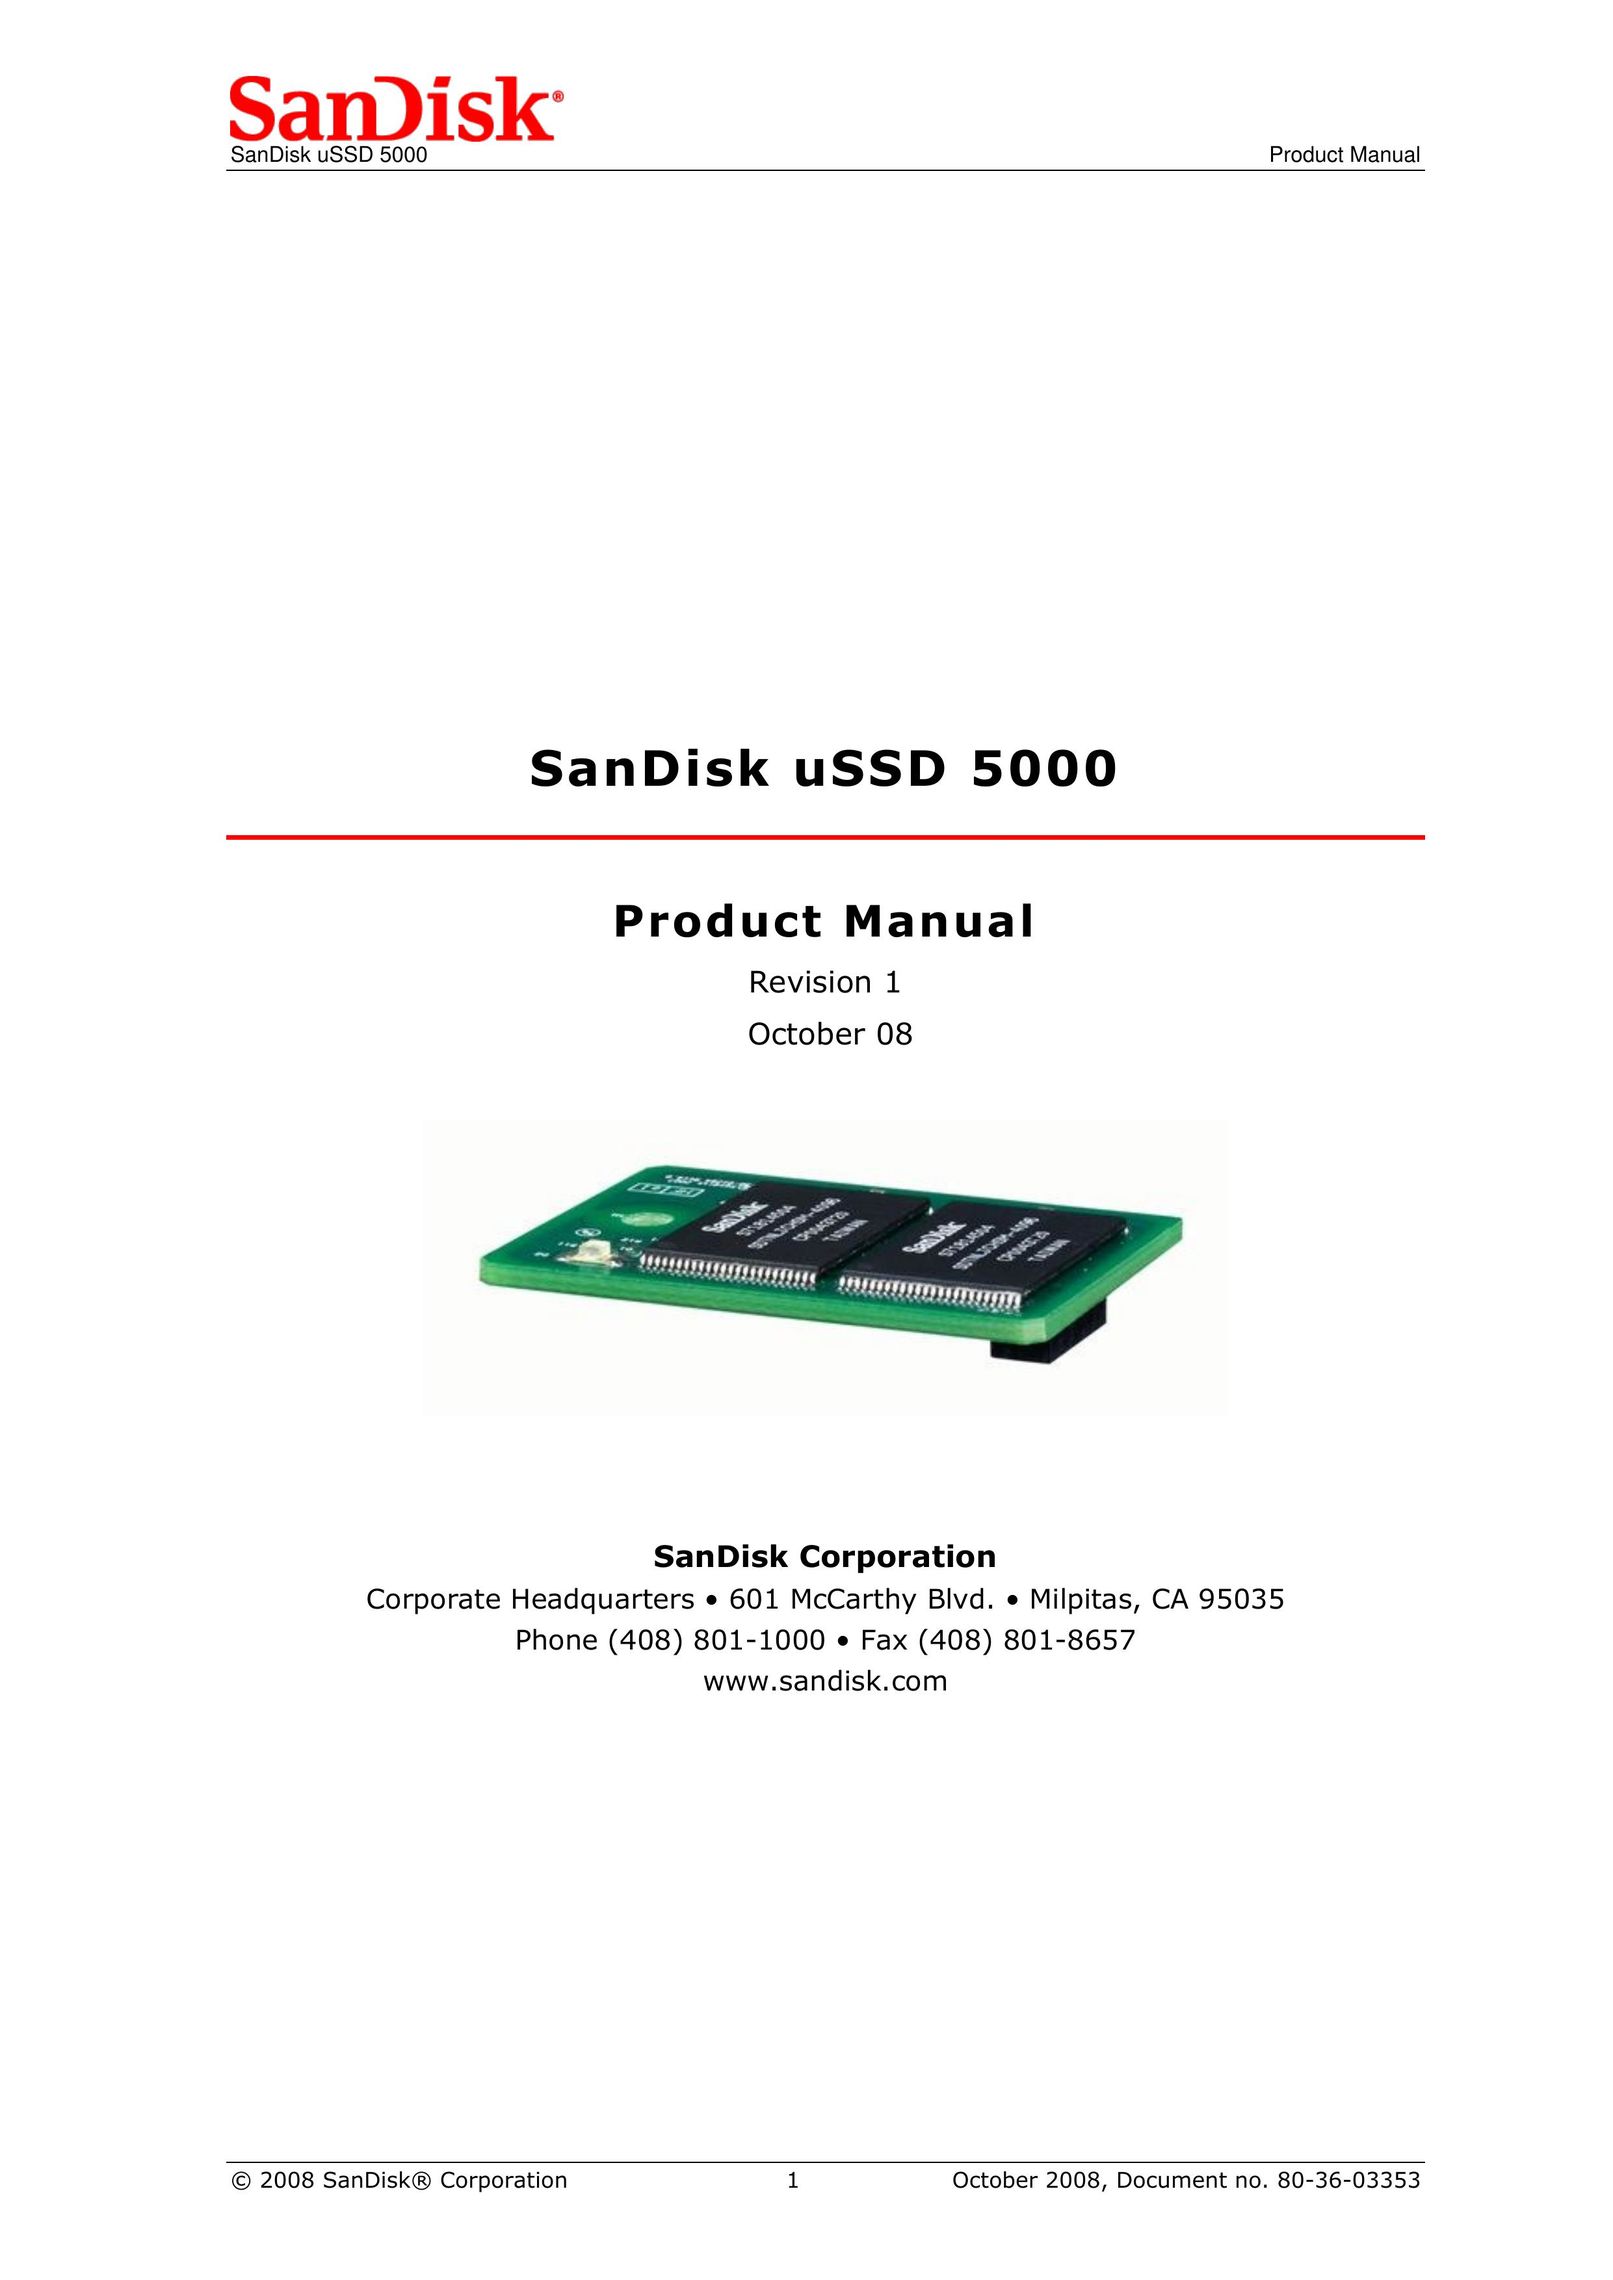 SanDisk 80-36-03353 Computer Drive User Manual